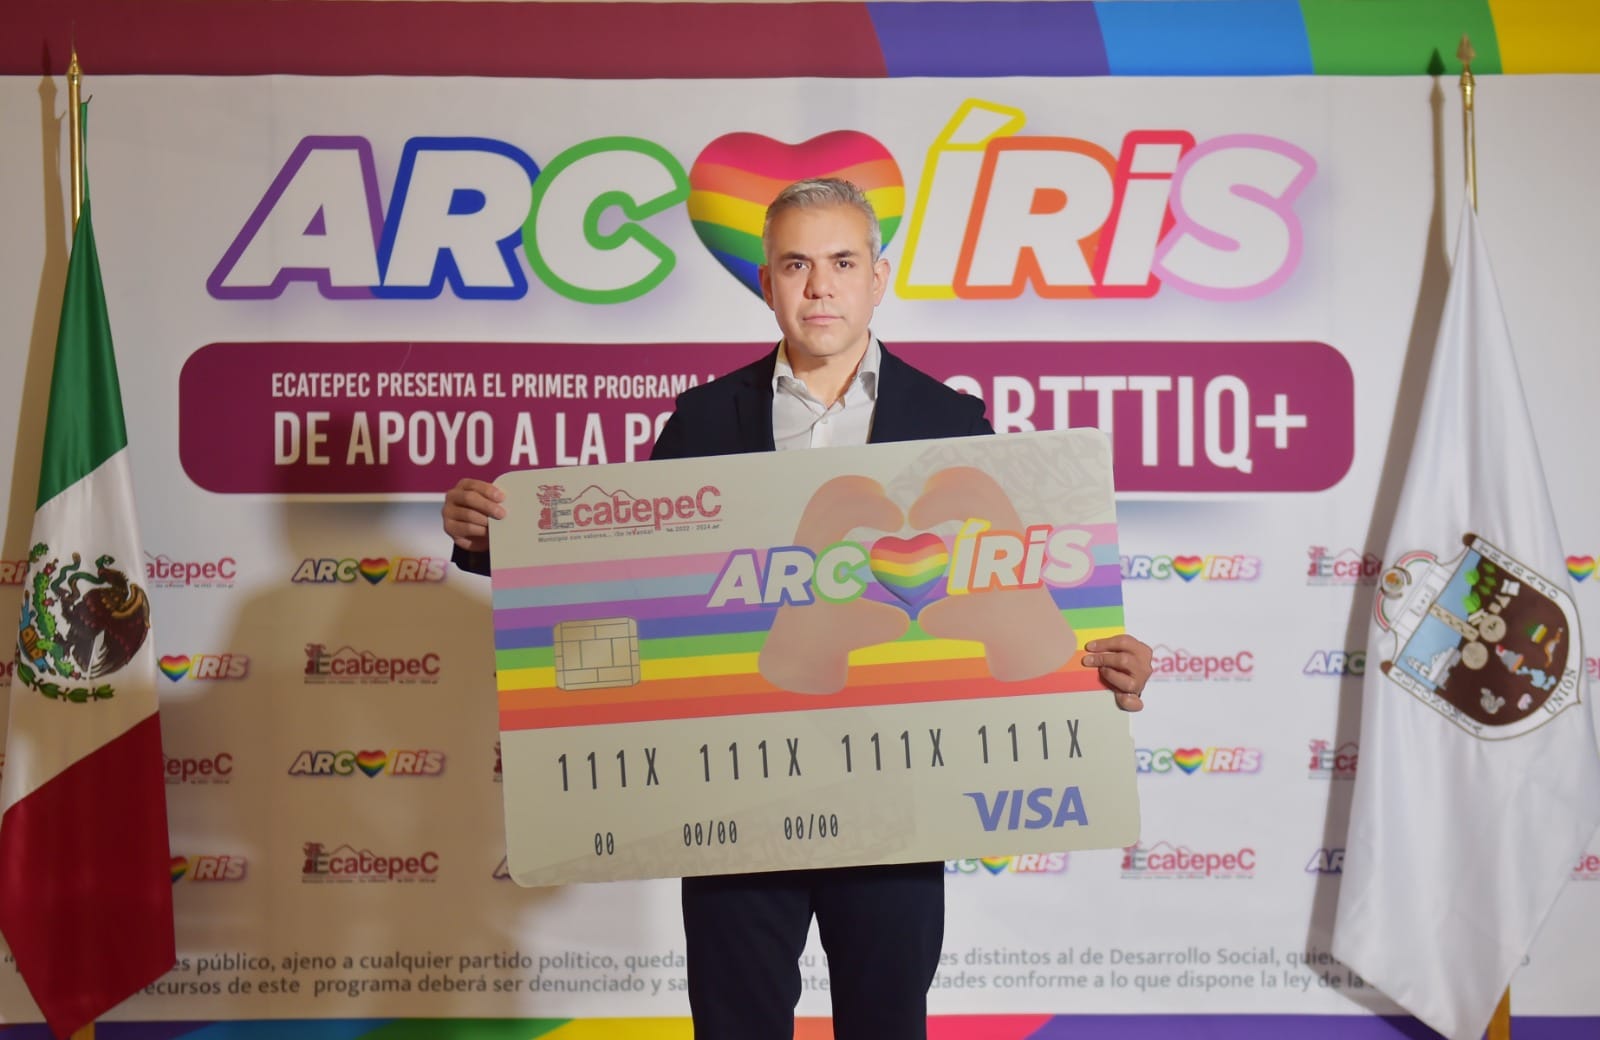 El alcalde de Ecatepec, Fernando Vilchis informó que entregará 10 mil pesos a miembros de la comunidad LGTB+ a través de la tarjeta Arcoiris Imagen: Fernando Vilchis